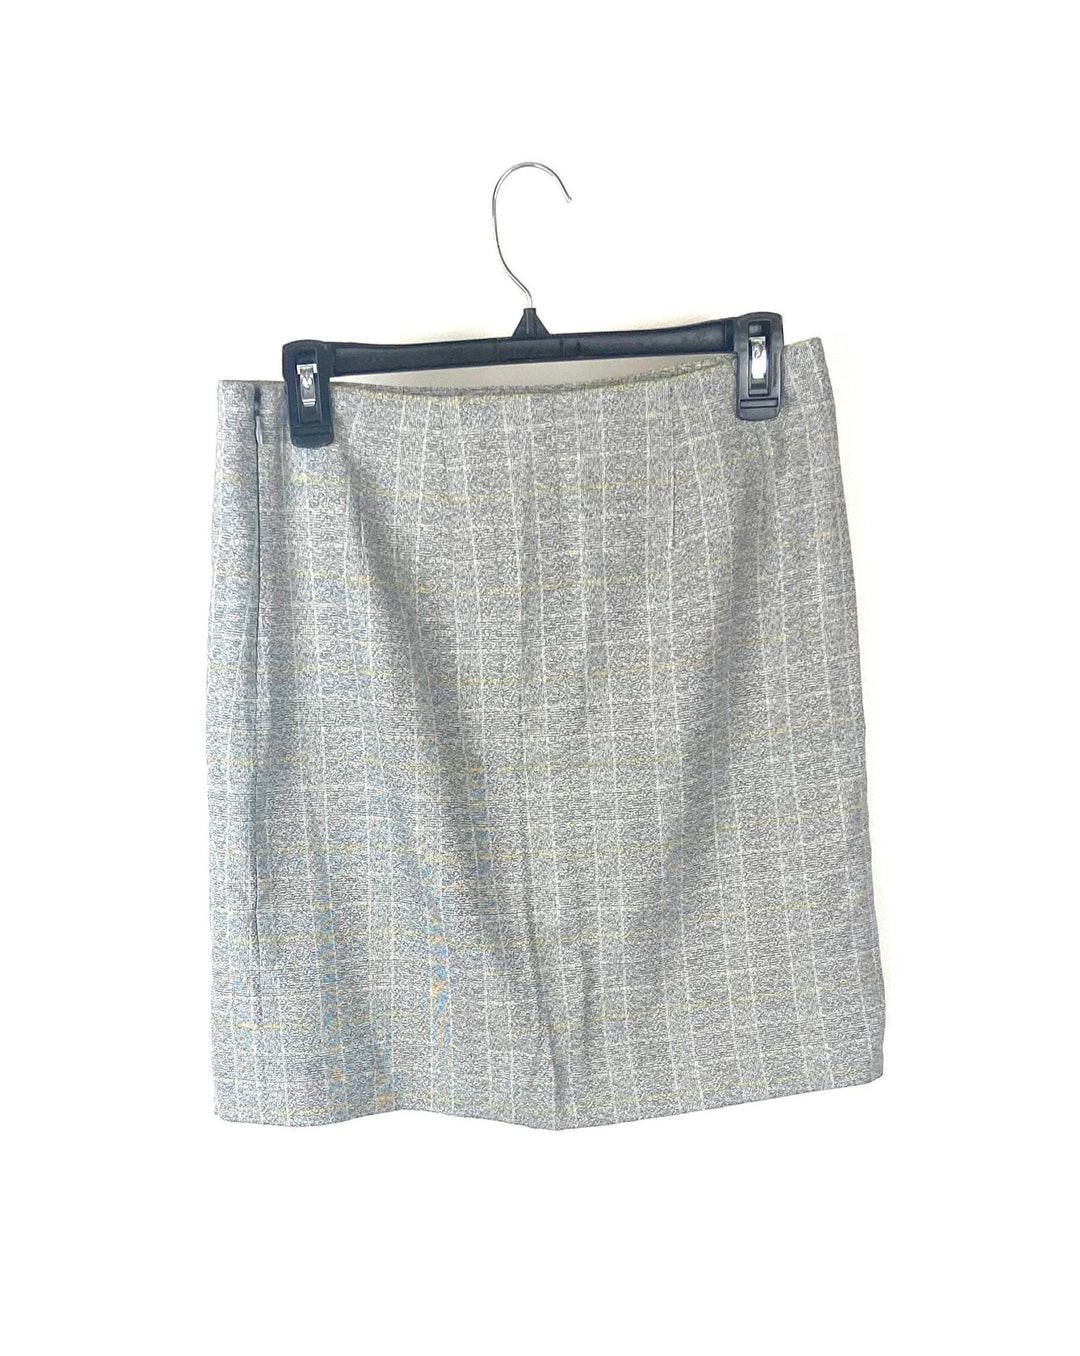 Grey Plaid Skirt - Medium